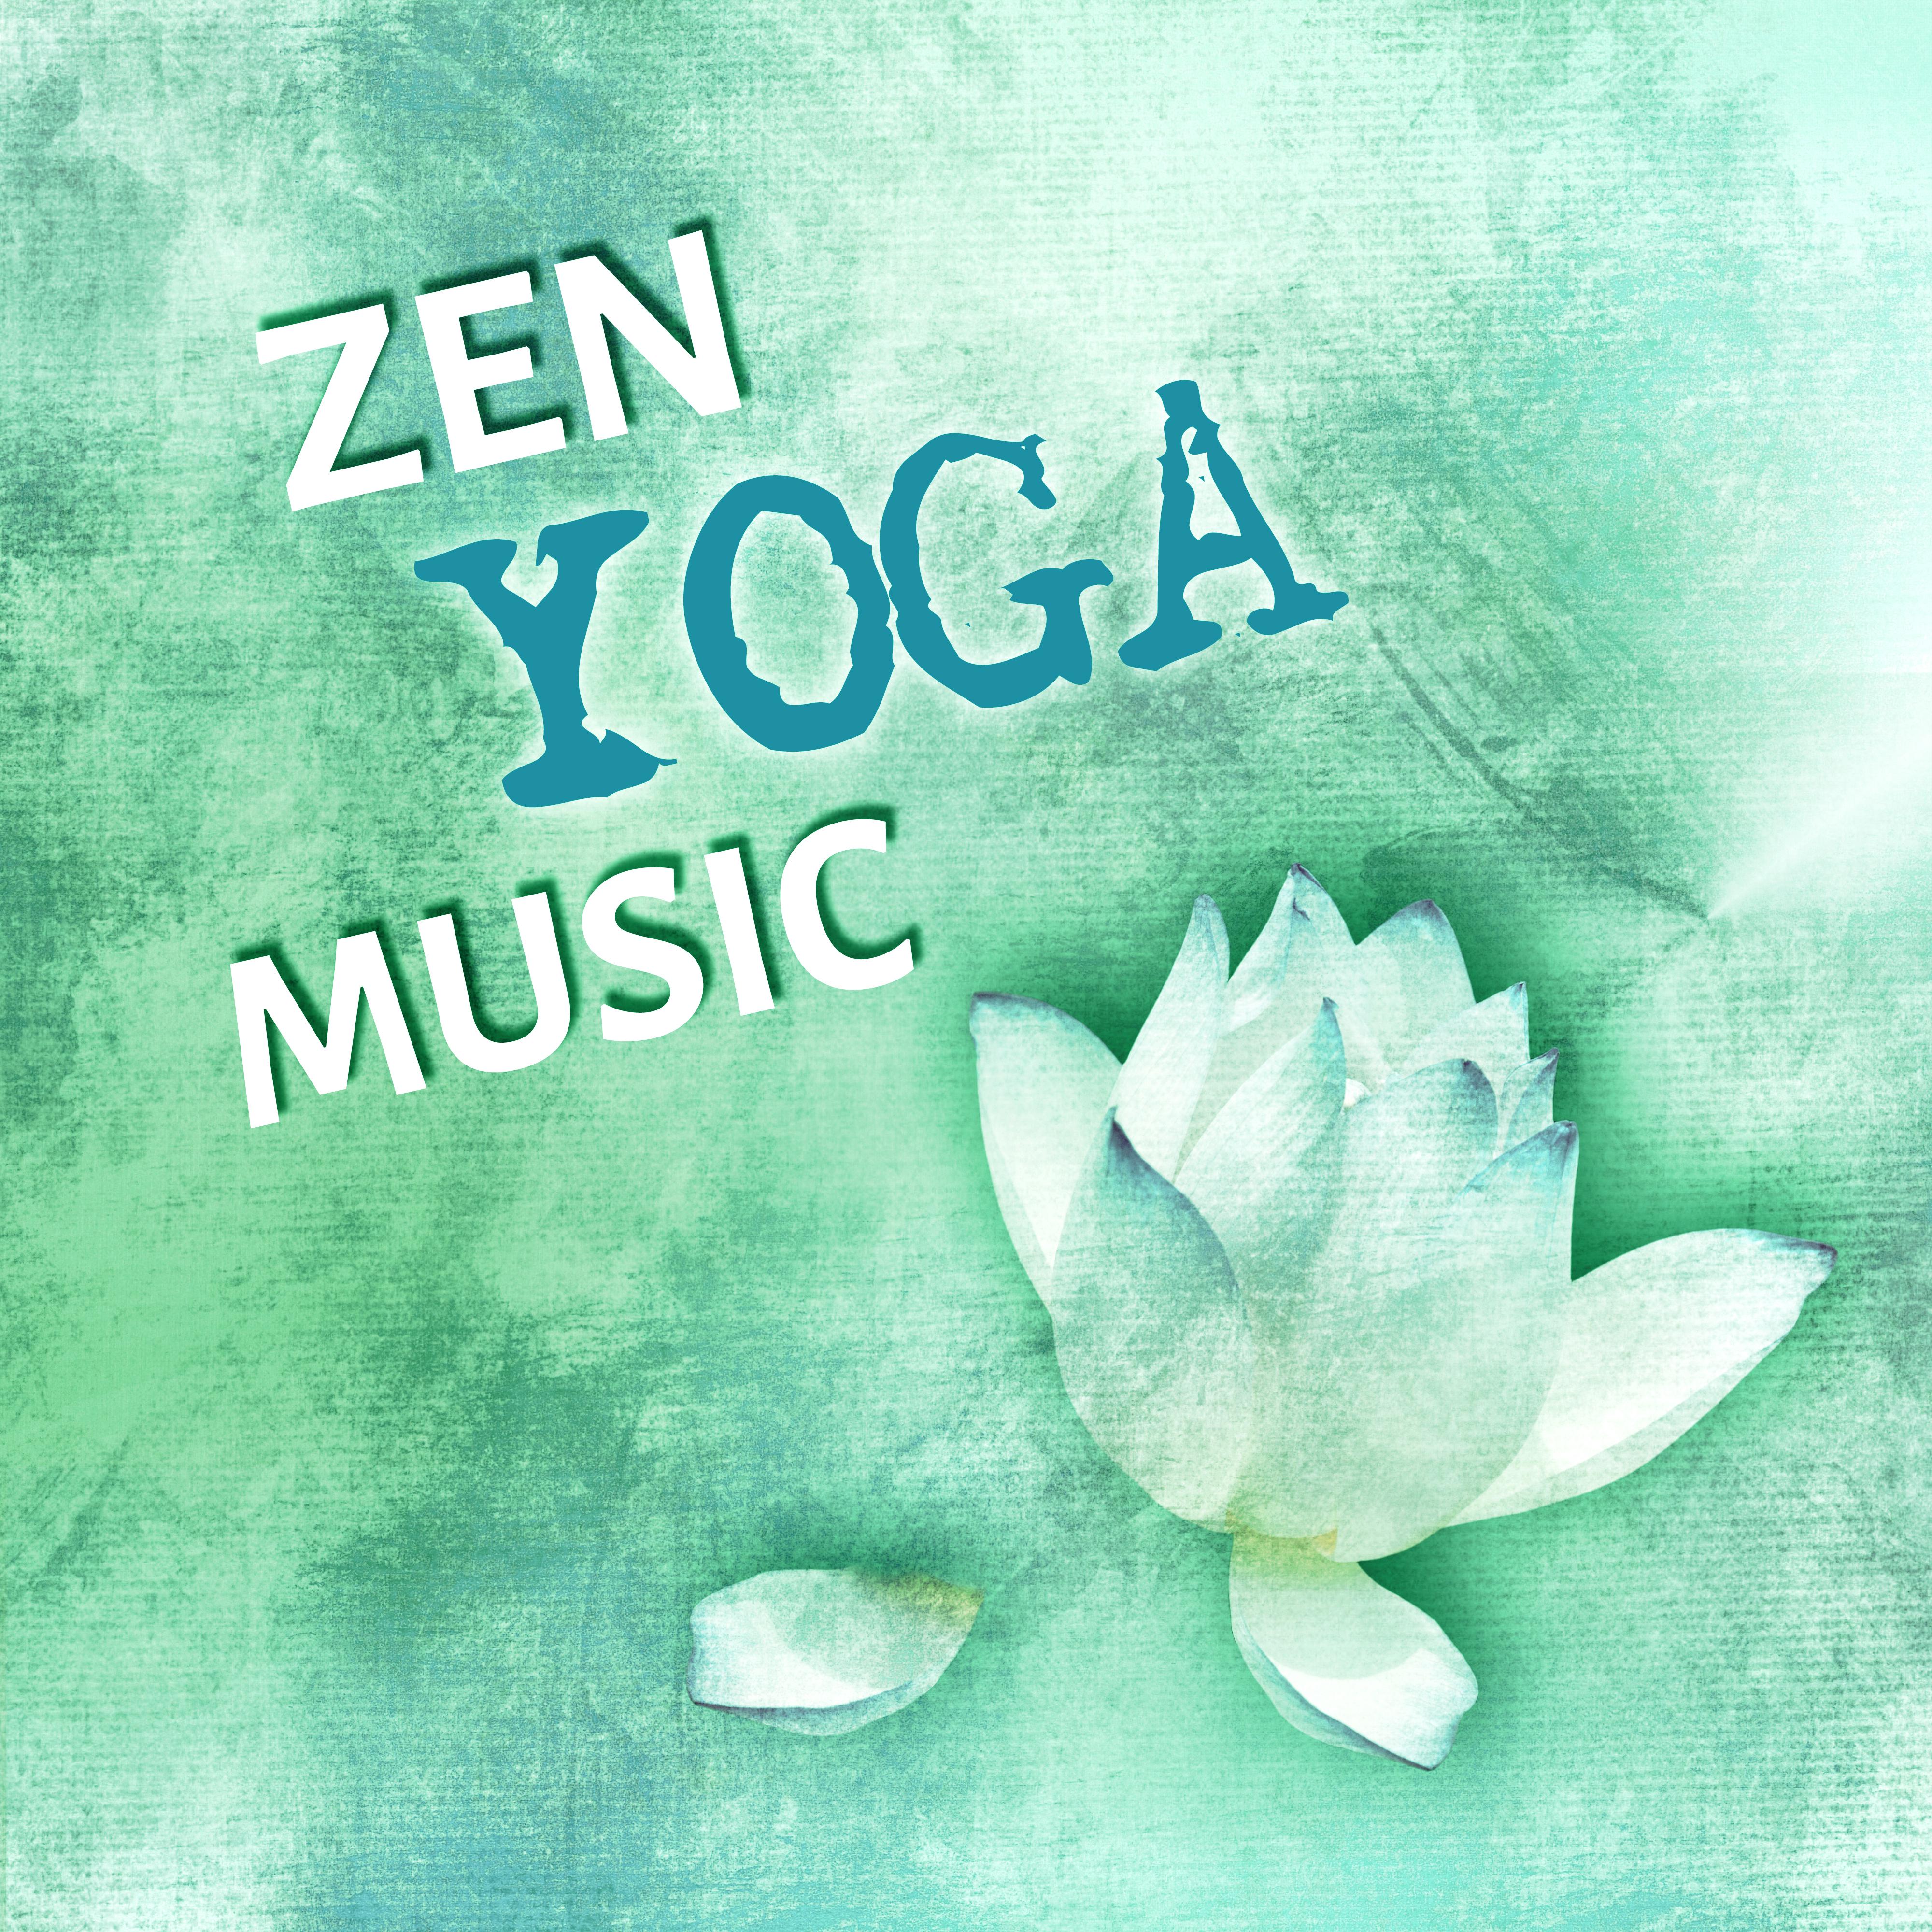 Zen Yoga Music – Healing Songs, Chakra Balancing, Spirituality, Morning Prayer, Mantras, Relaxation, Pranayama, Sleep Meditation, Massage & Wellness